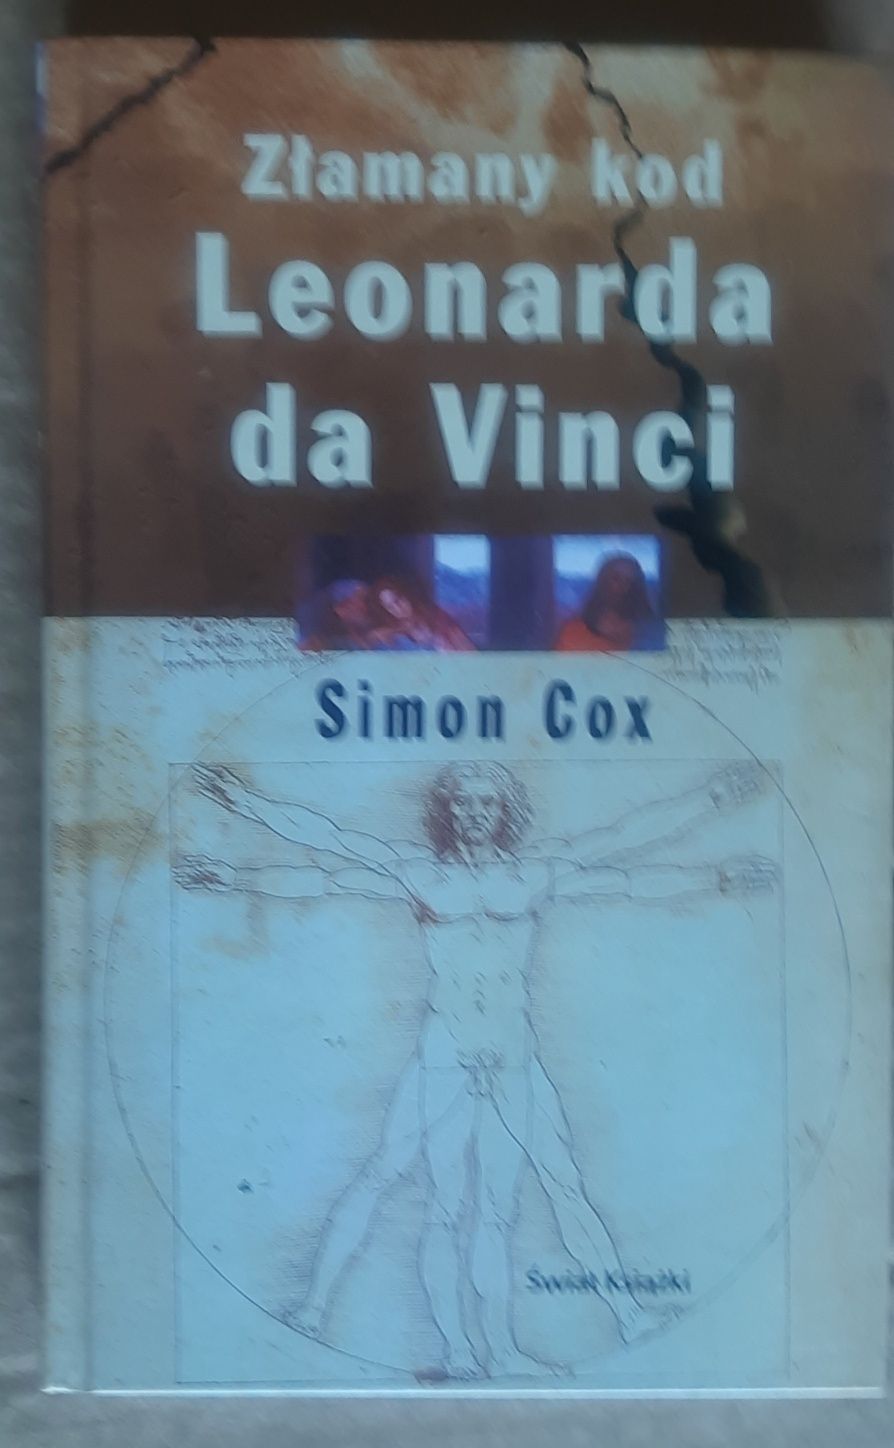 Złamany kod Leonarda da Vinci 
Simon CoxSimon CoxOkładka książki Zł